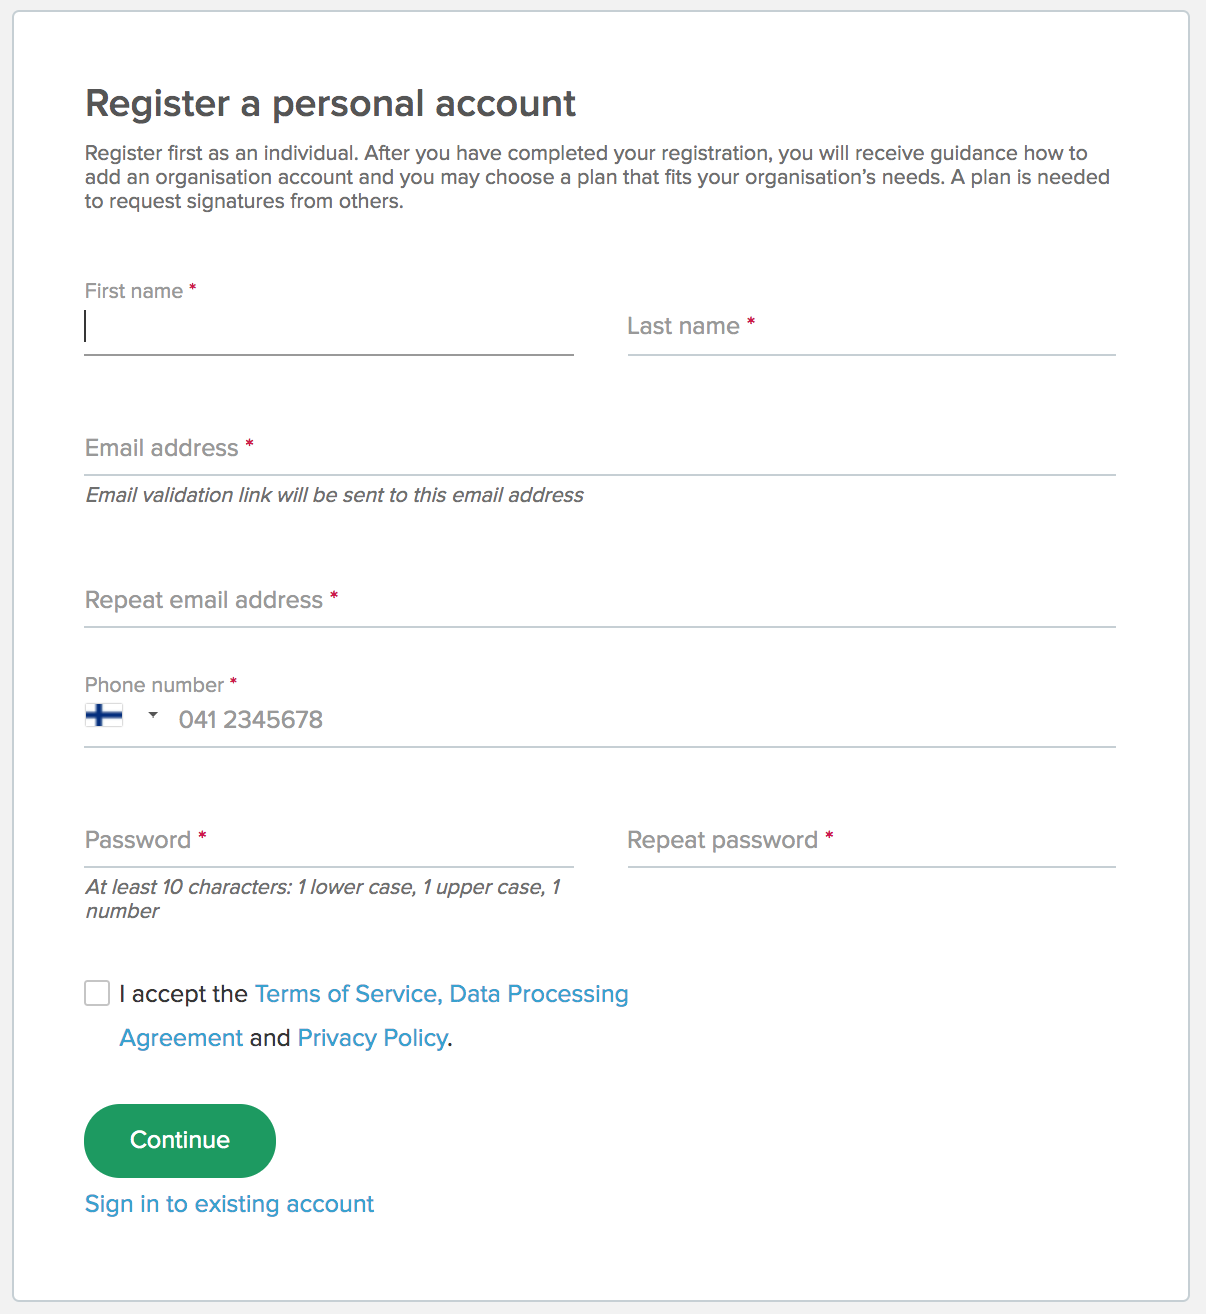 Empty registration form